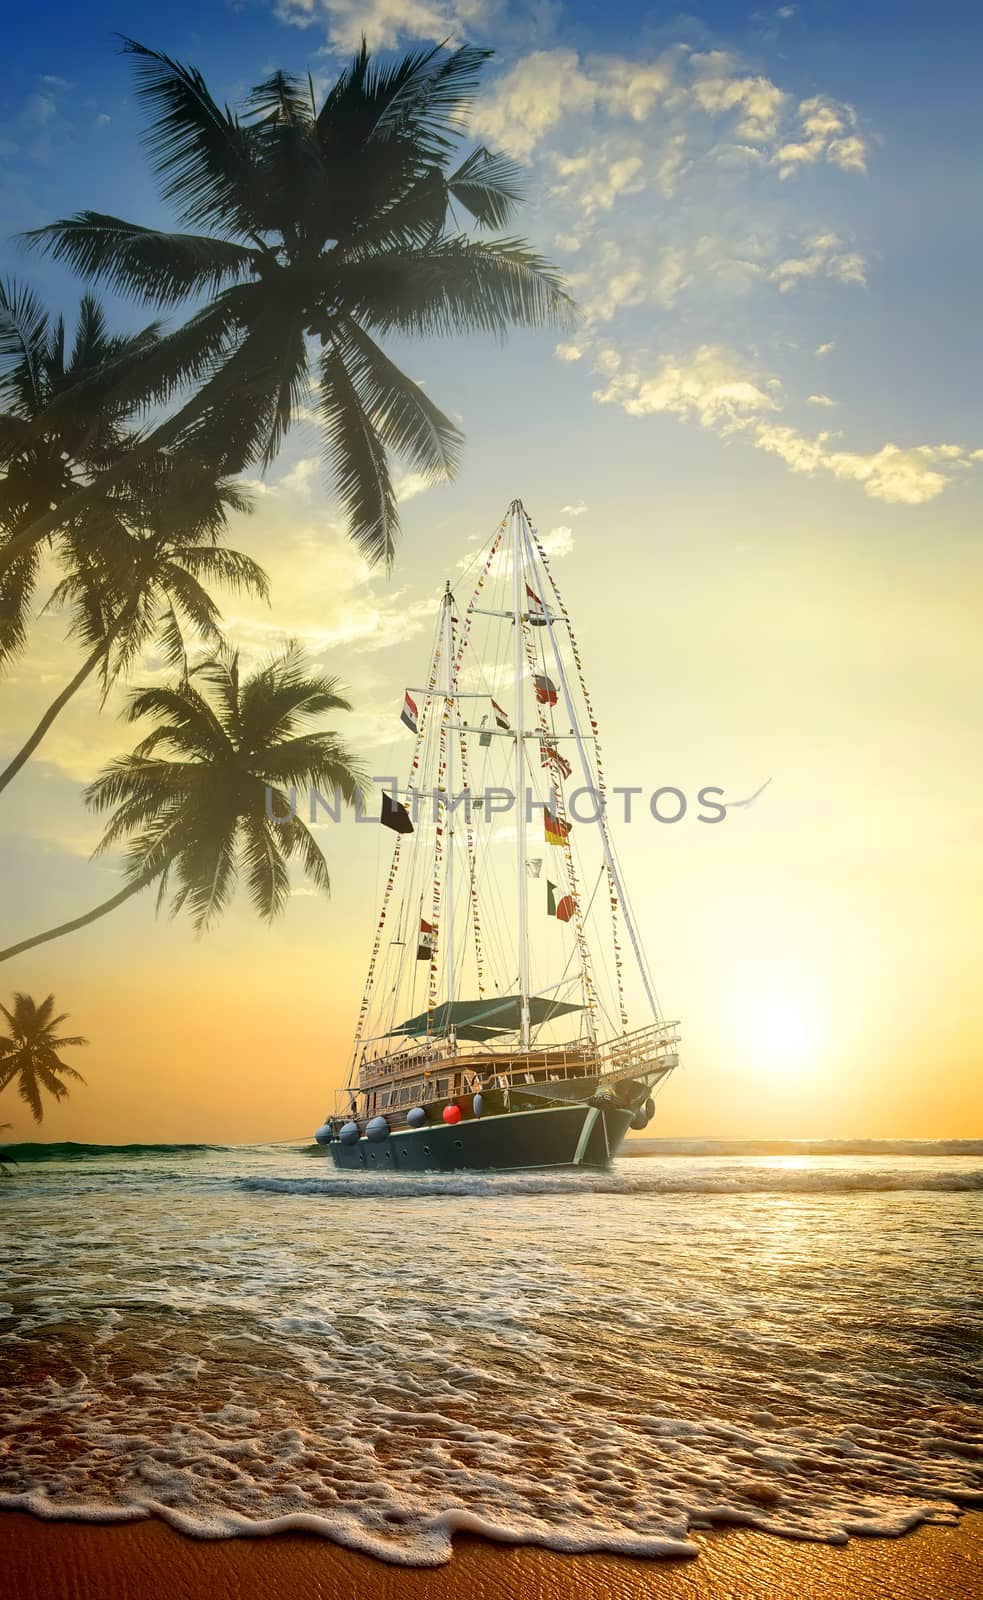 Beautiful ship in ocean near coast with palm trees